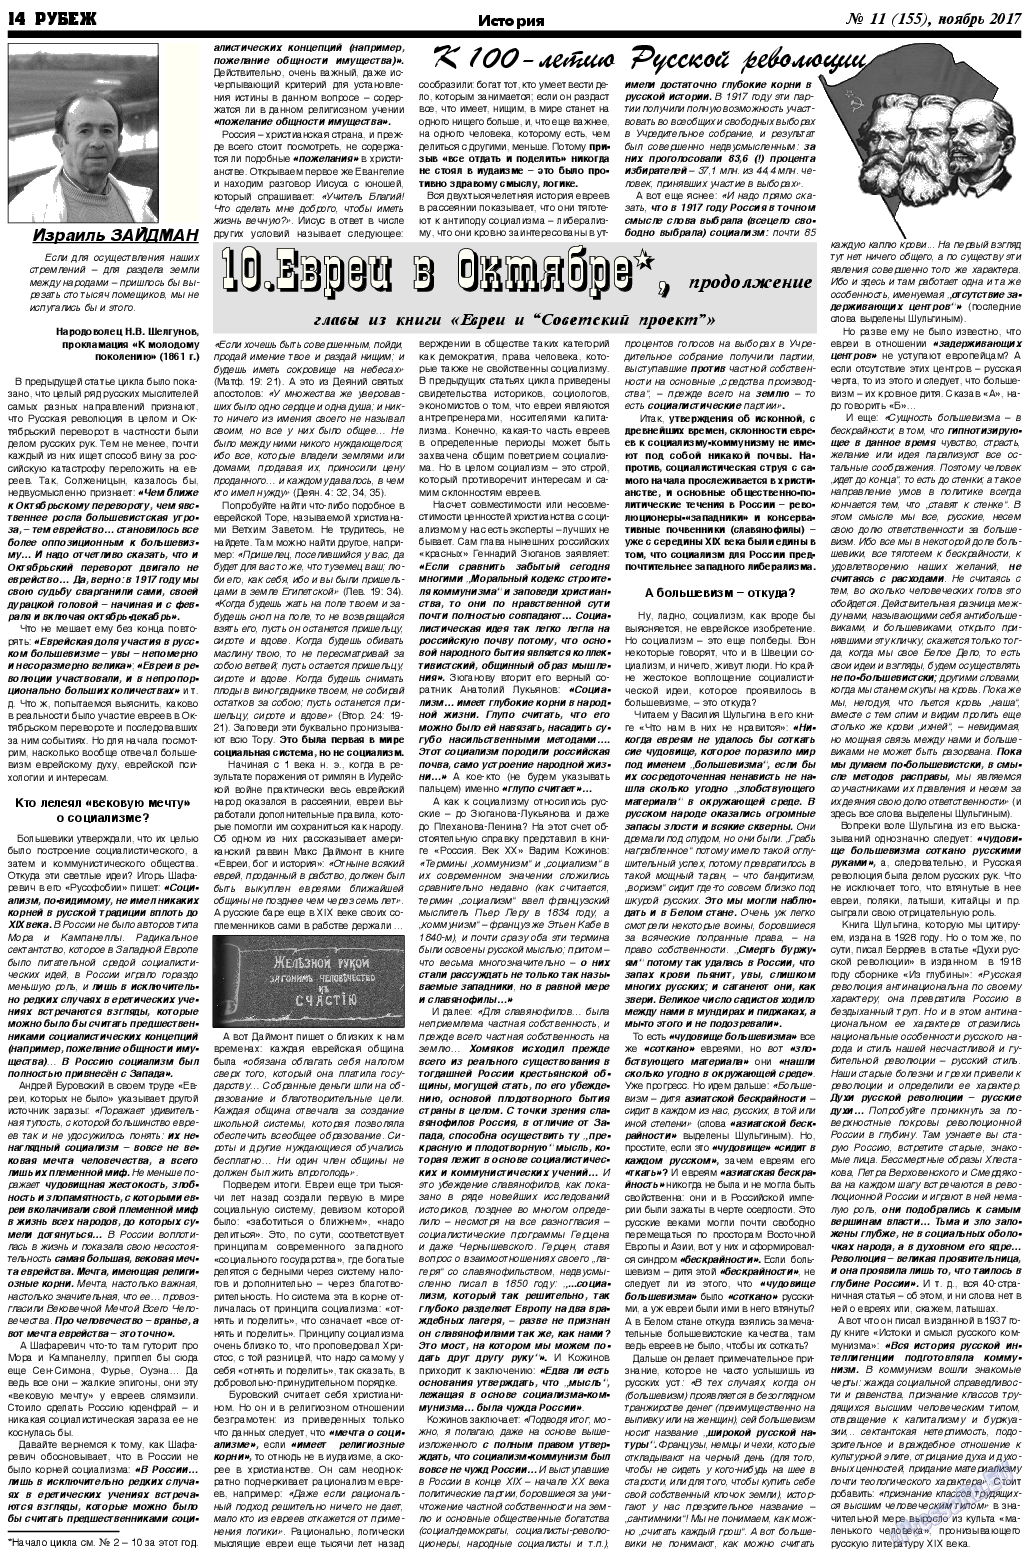 Рубеж, газета. 2017 №11 стр.14